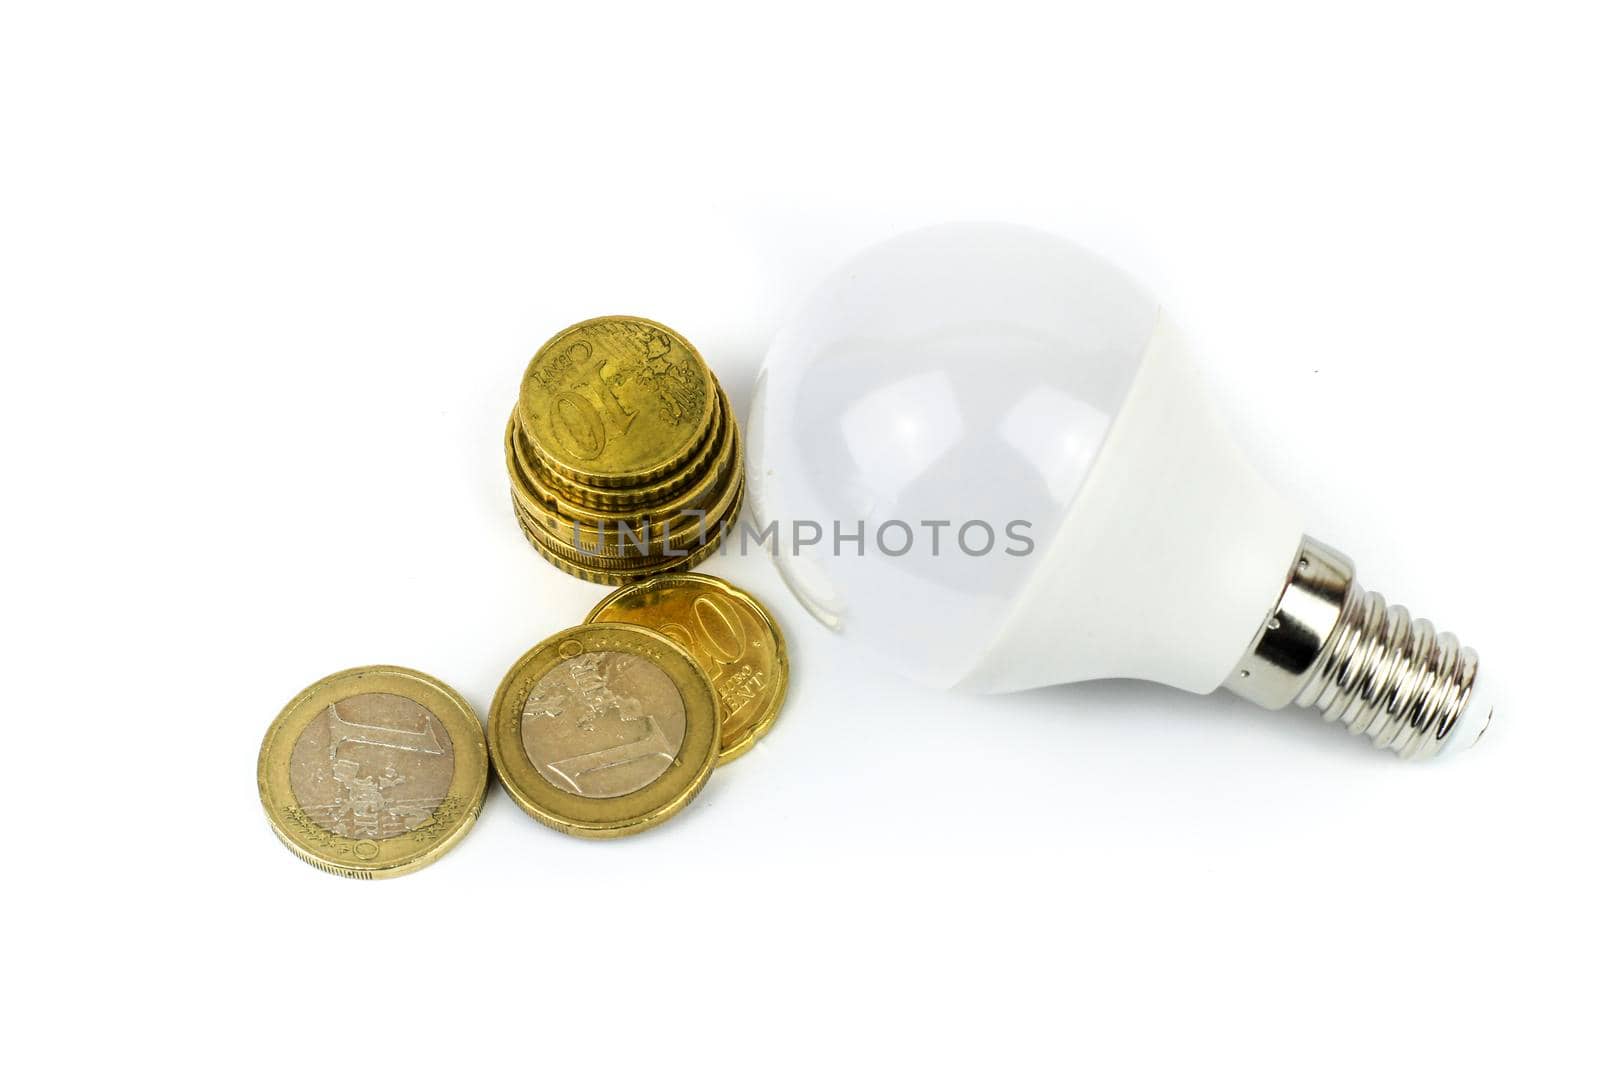 Led light bulb next to euro coins on white background